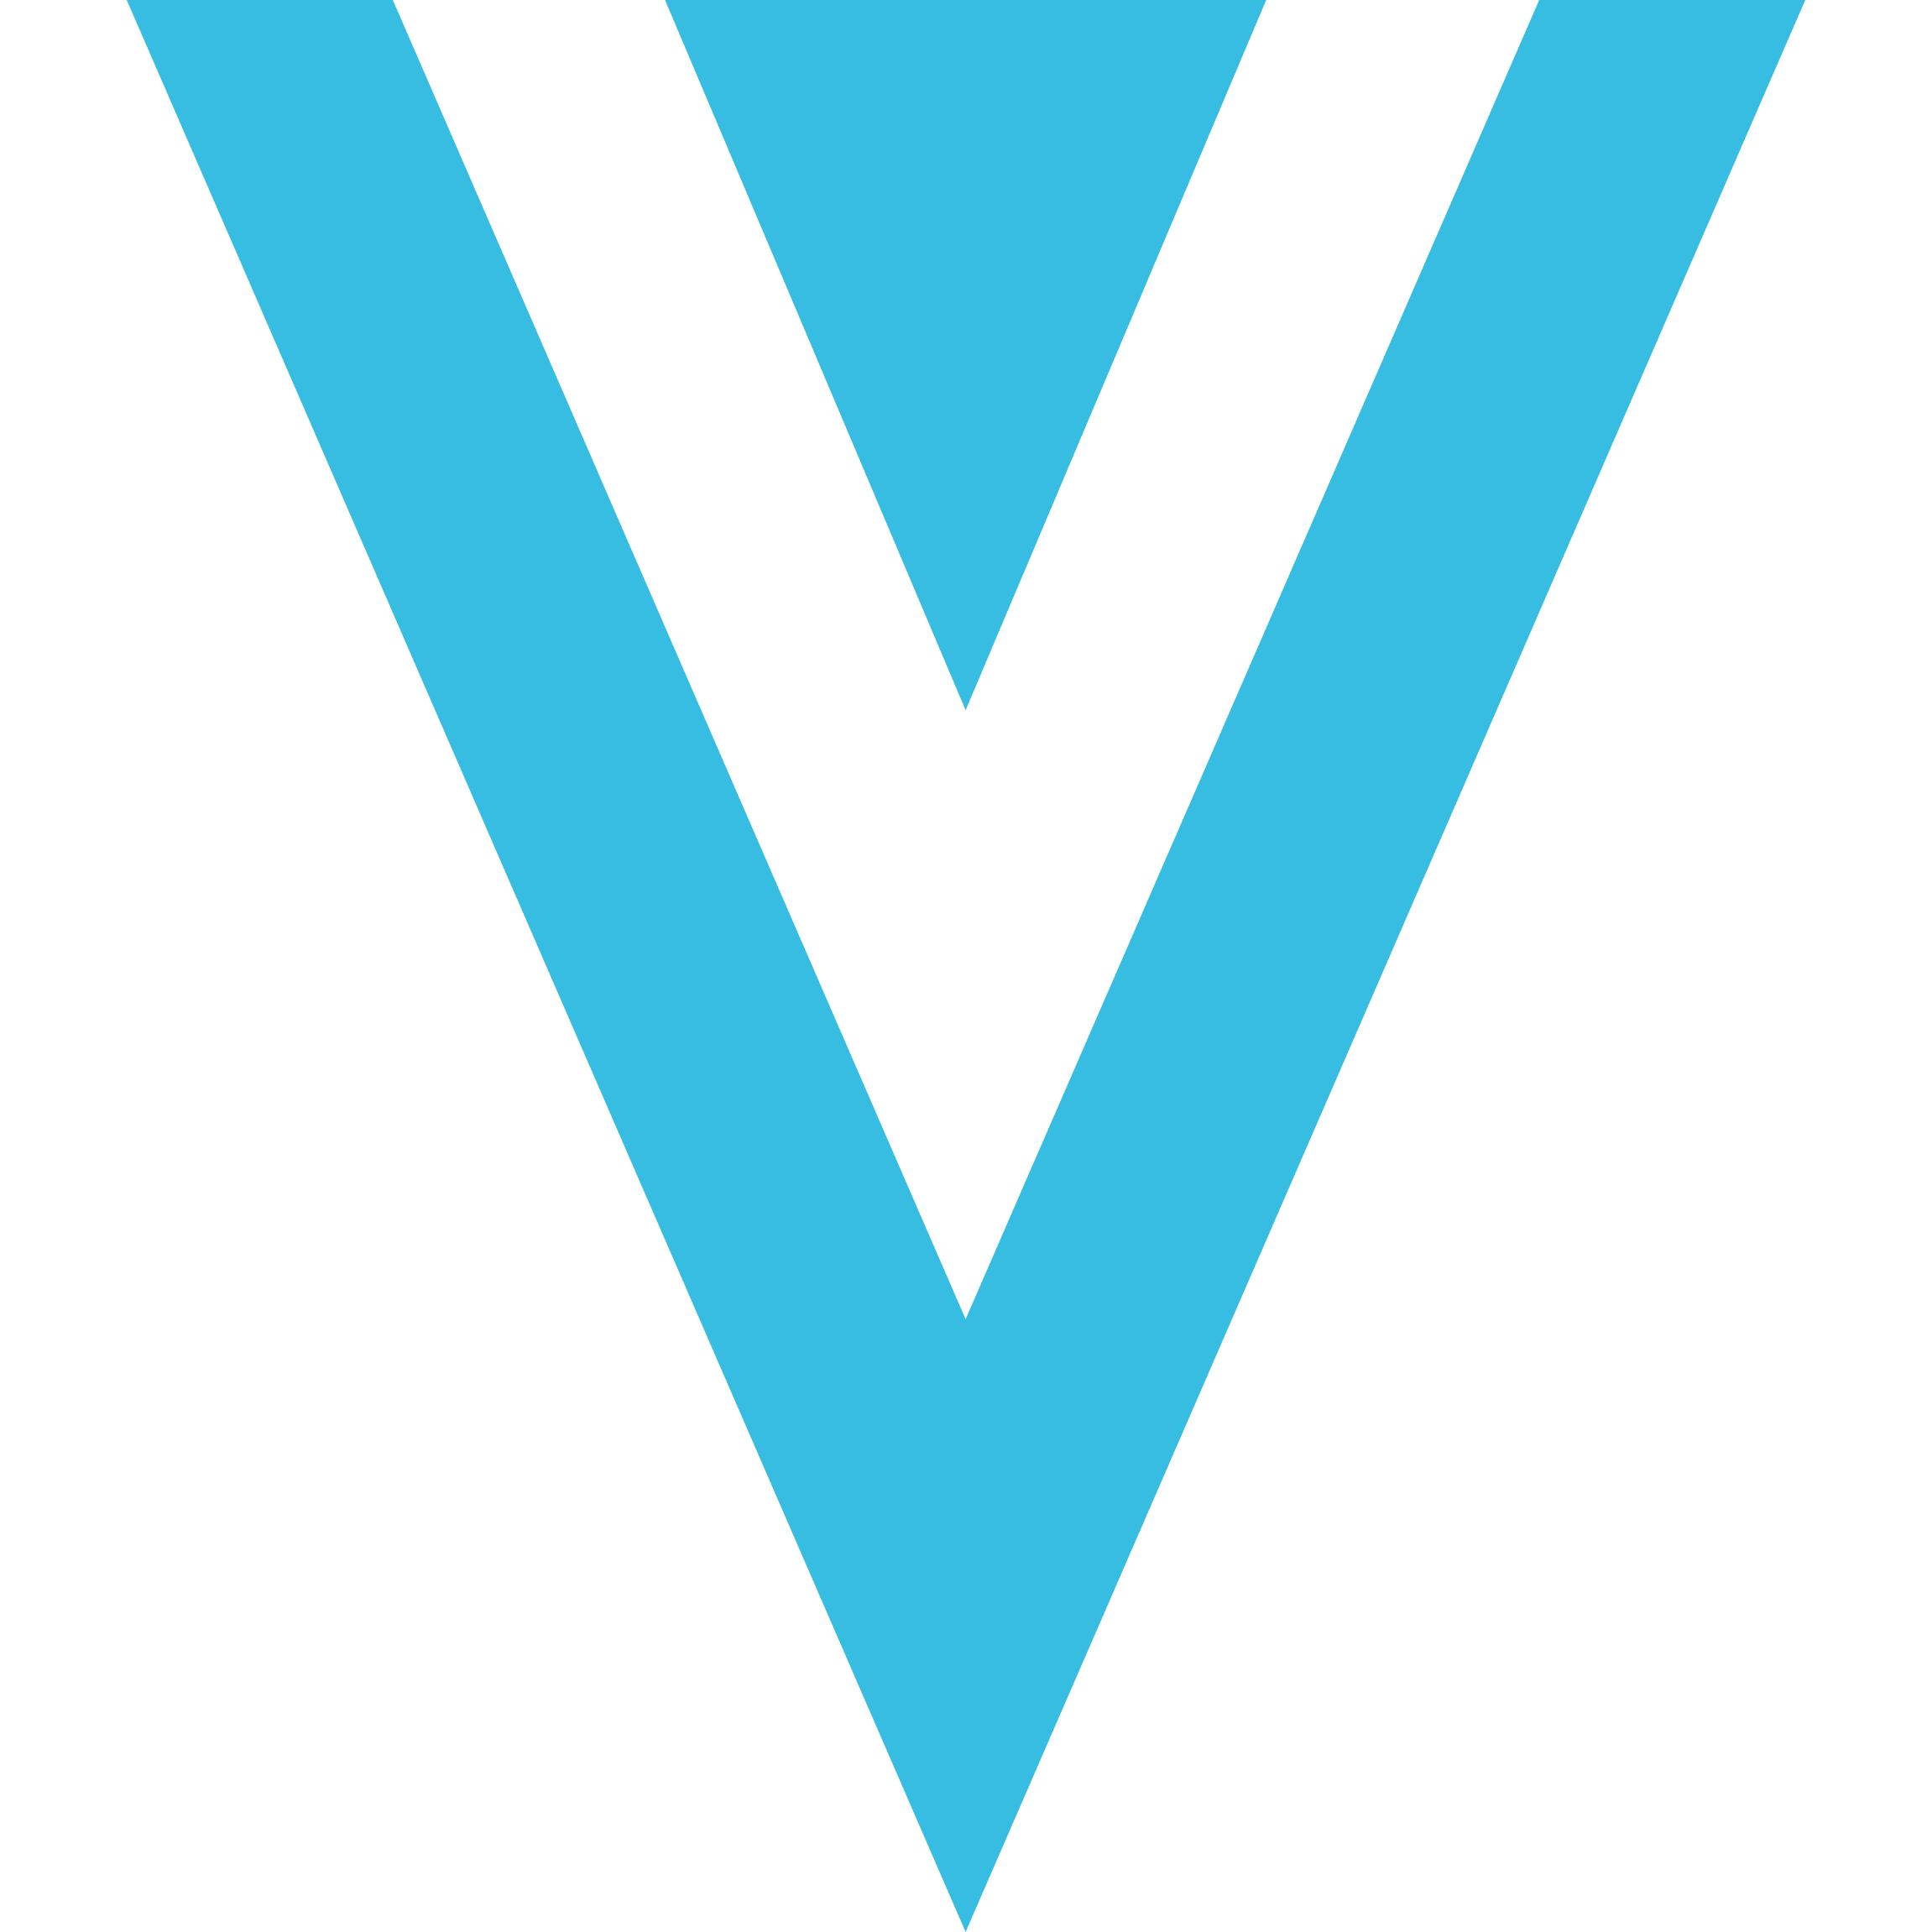 Verge logo in png format